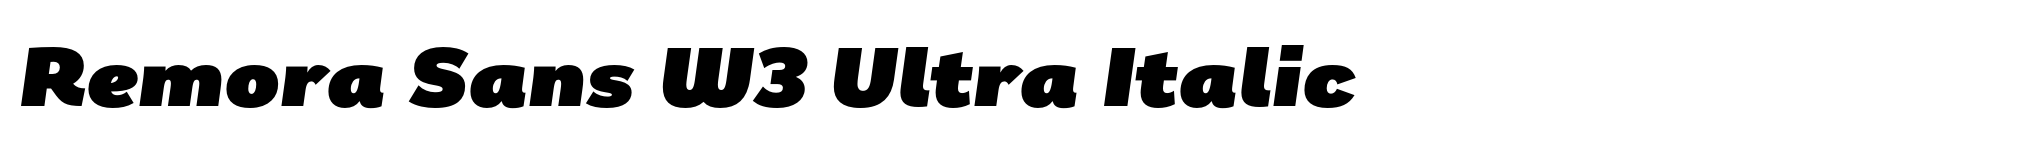 Remora Sans W3 Ultra Italic image